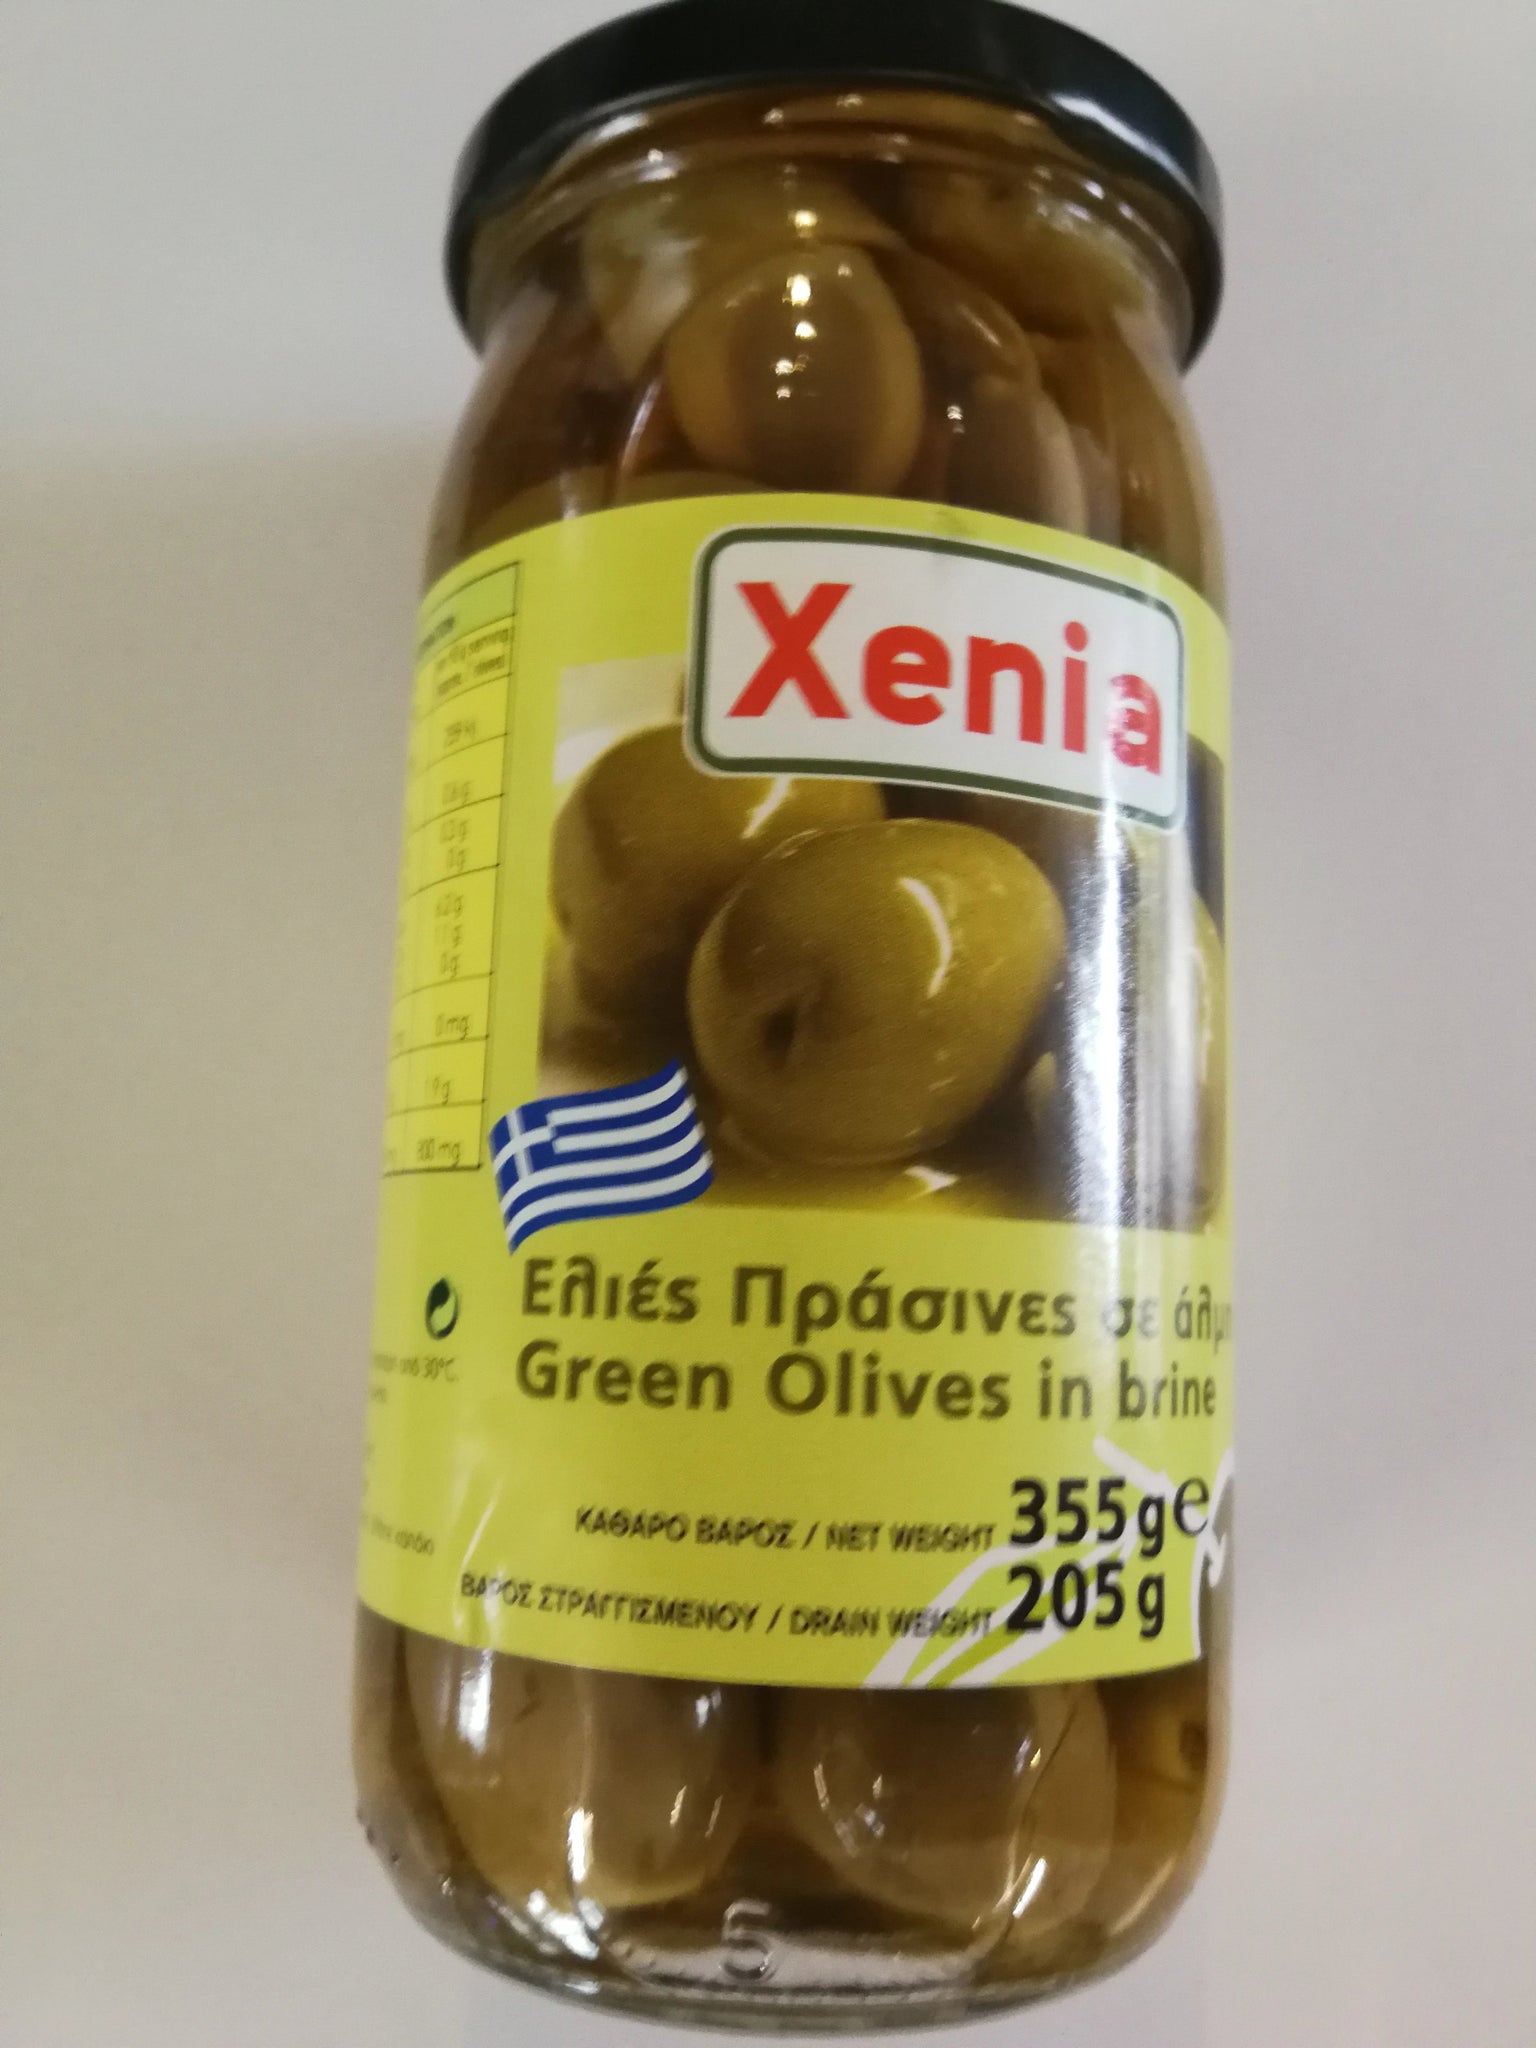 Xenia Green Olives in Brine 355g